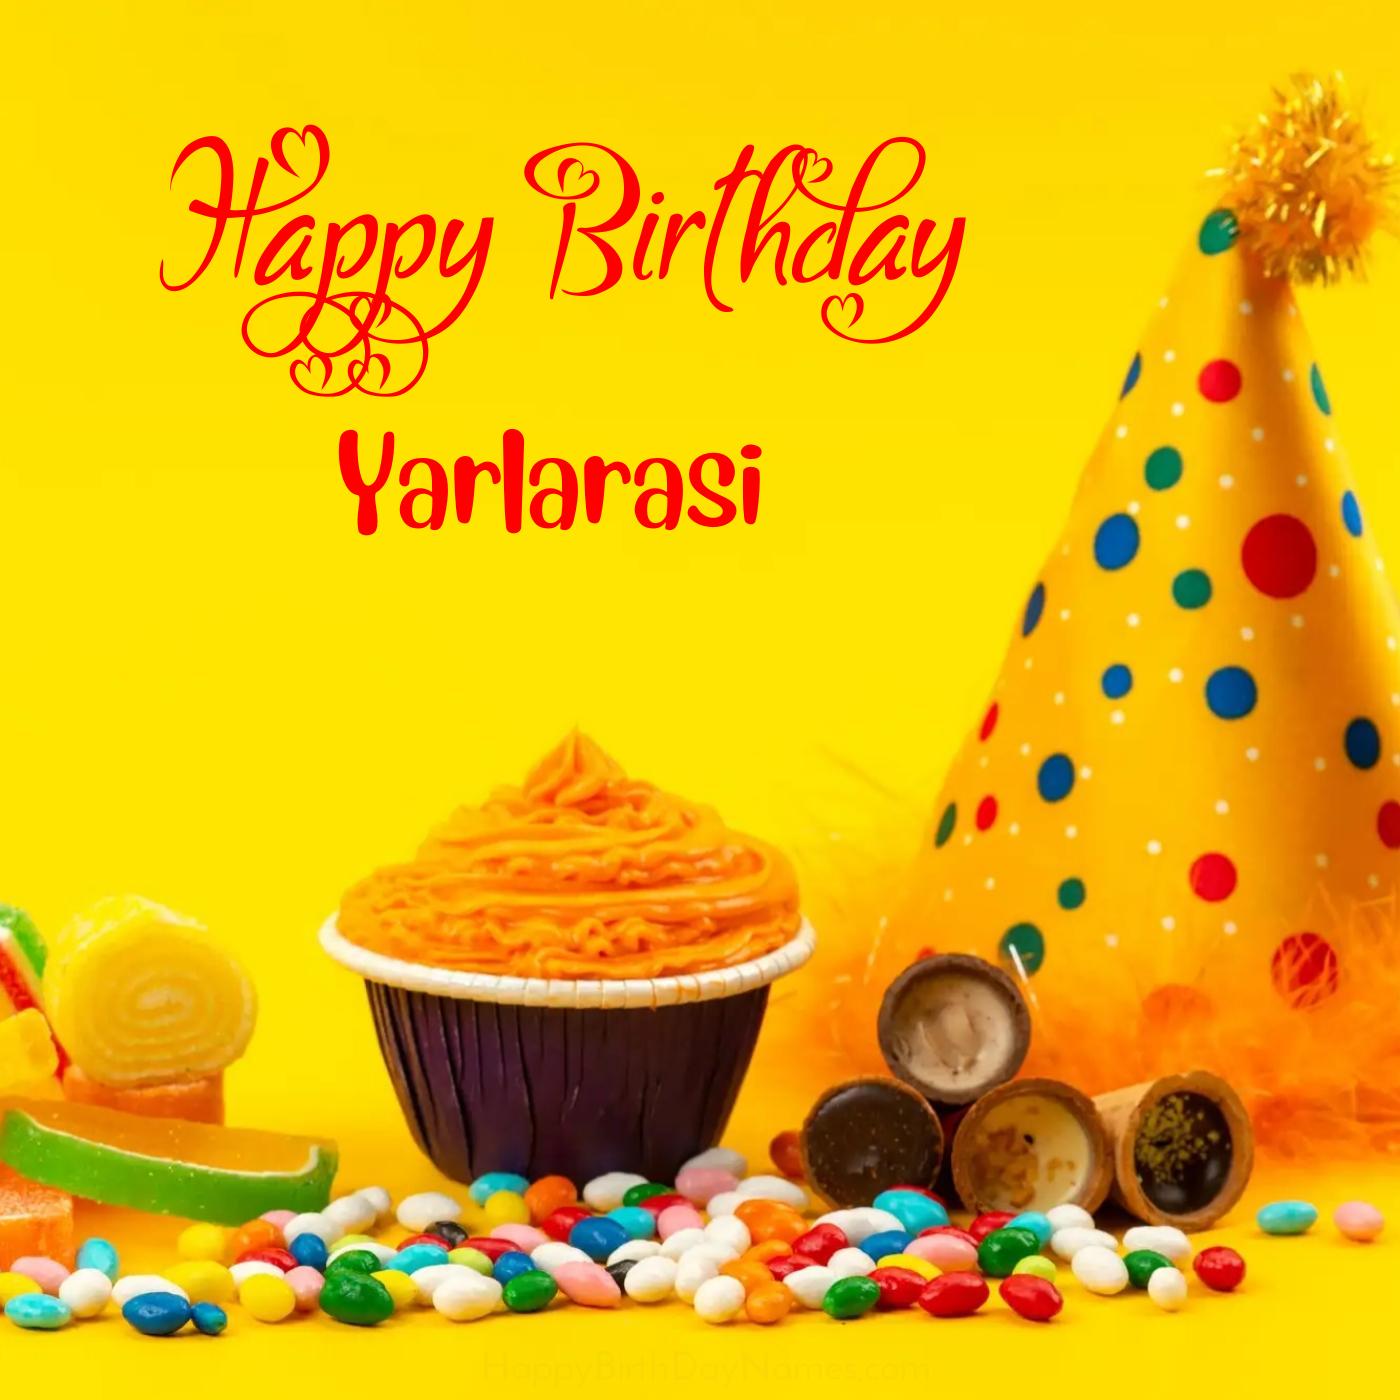 Happy Birthday Yarlarasi Colourful Celebration Card